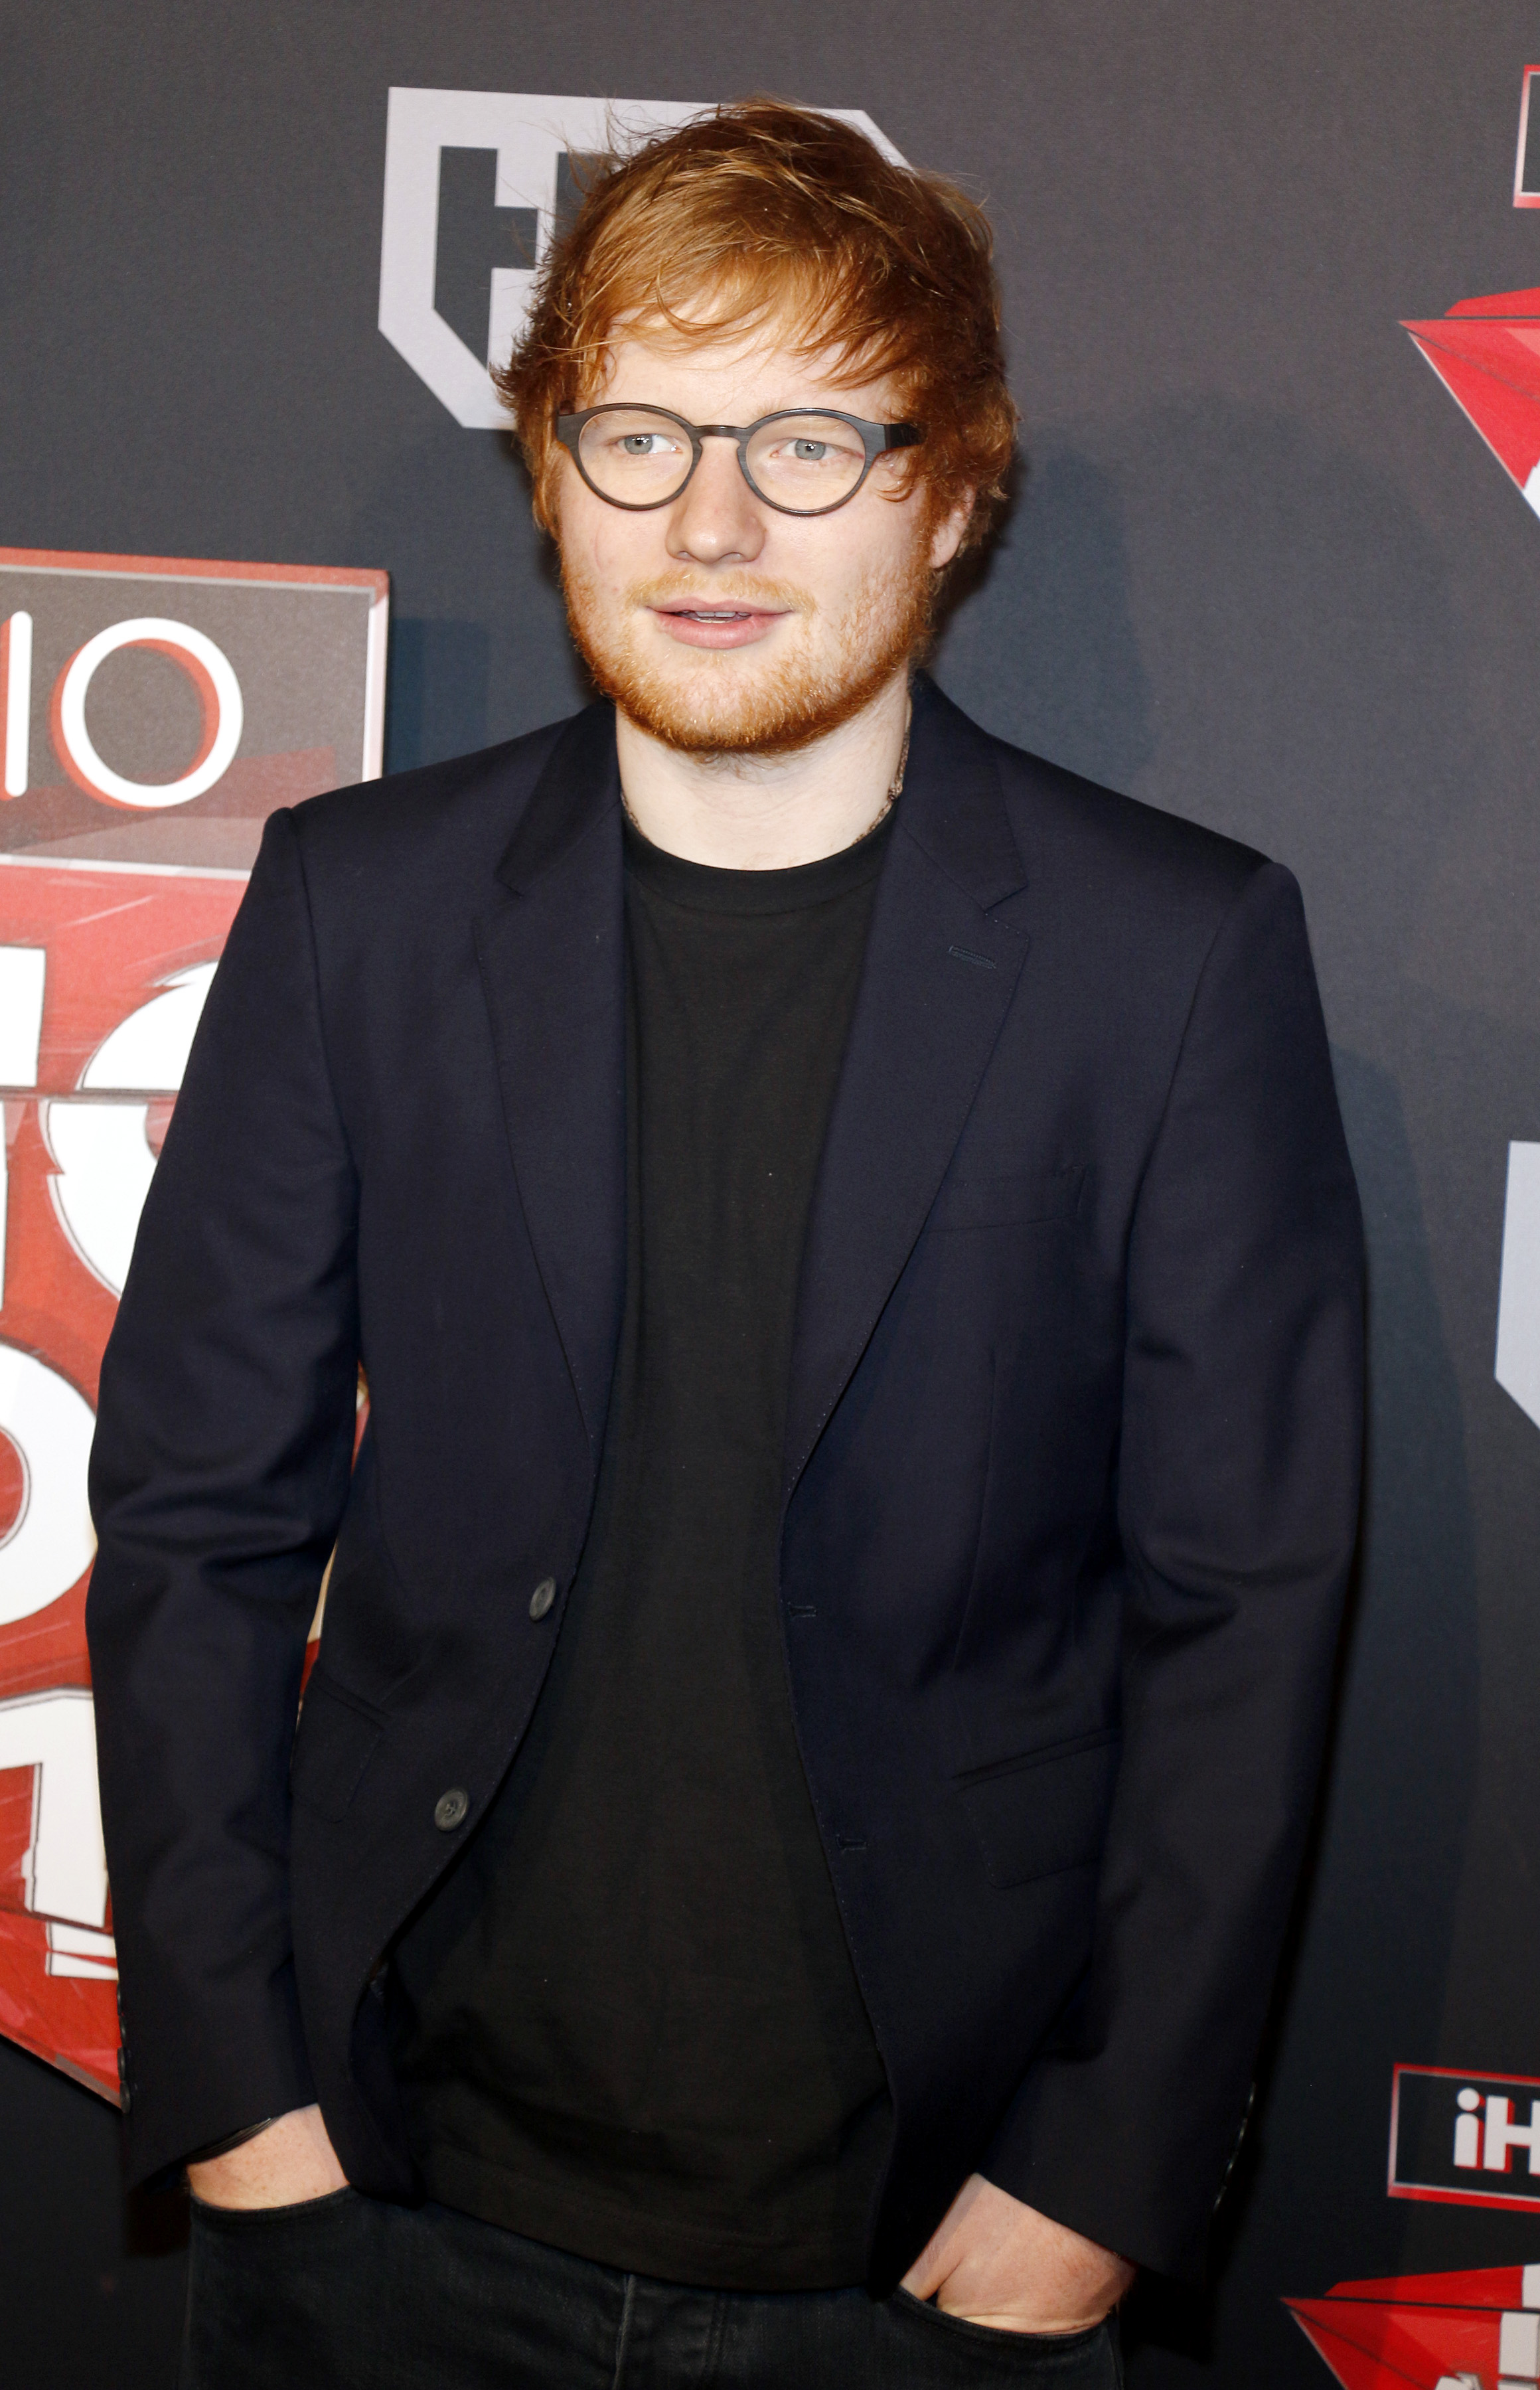 Ed Sheeran announces engagement to childhood friend Cherry Seaborn